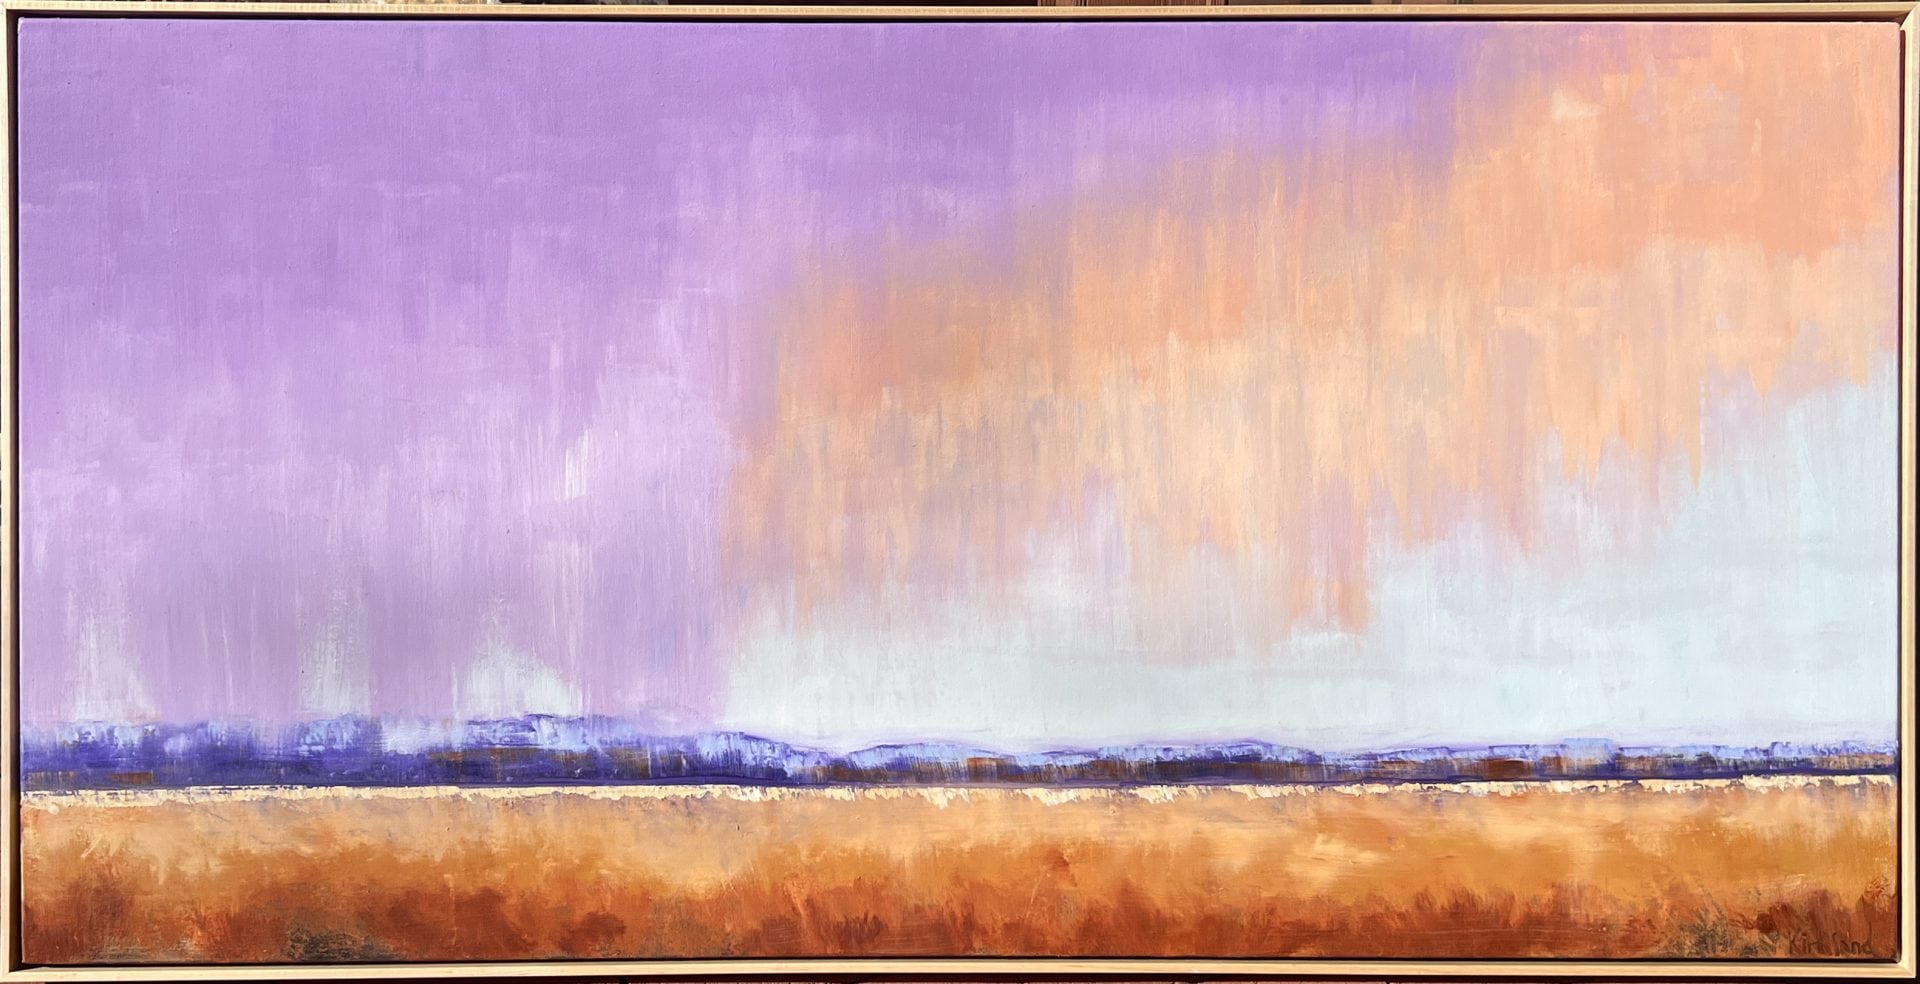 lavendar and peach clouds over warm landscape